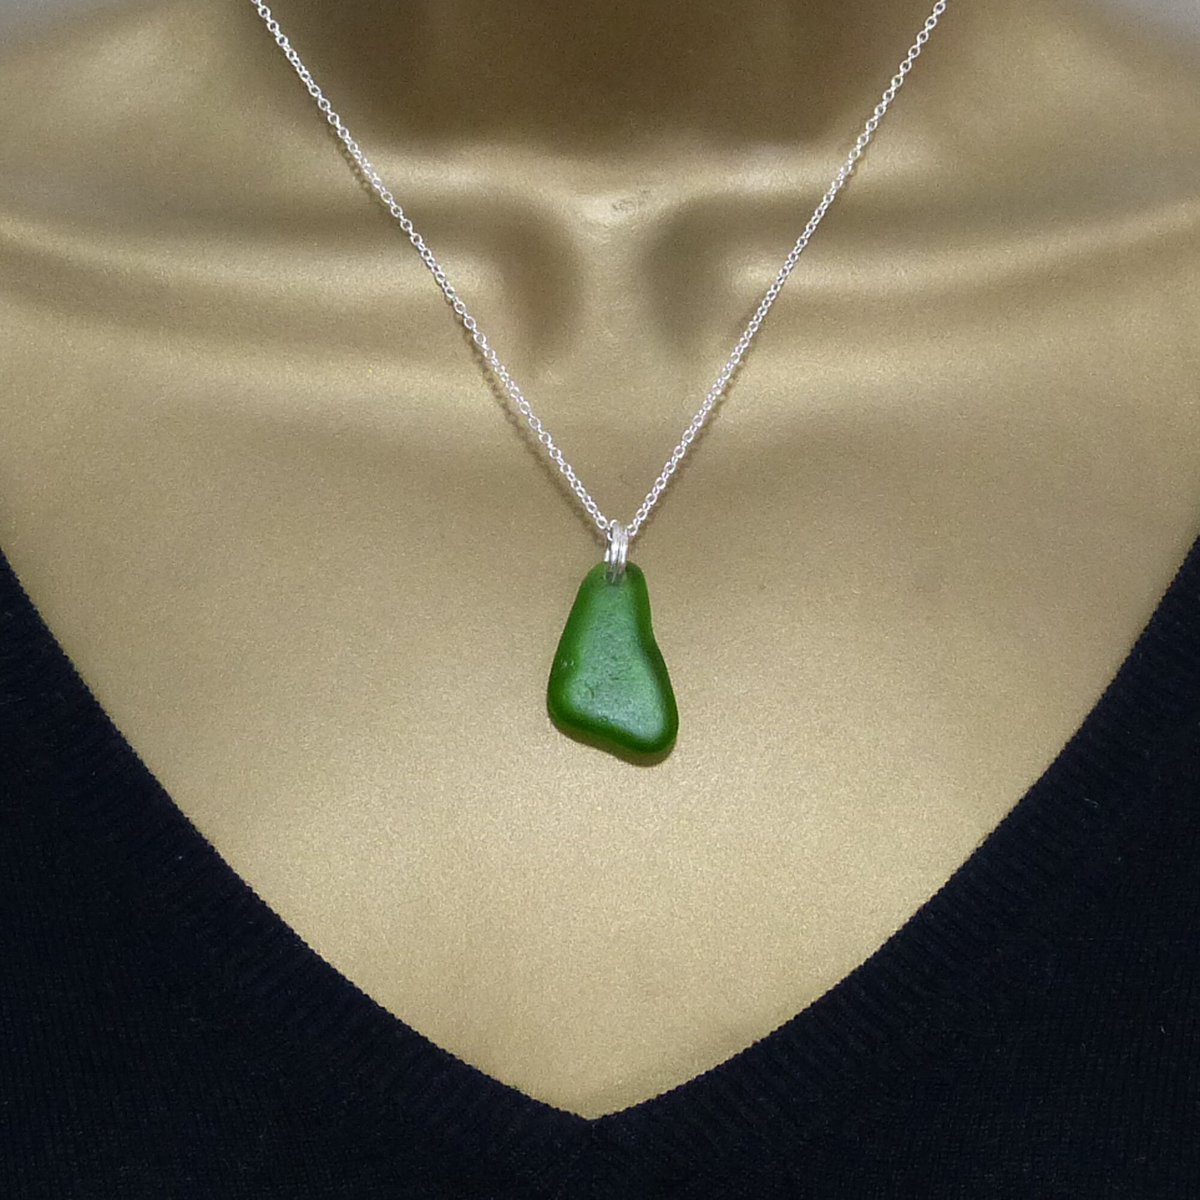 Emerald Green Sea Glass Necklace, Double Ring Necklace, Minimalist Necklace, The Strandline, 16, 18, 20, 22 or 24 inch tuppu.net/ec9df213 #MHHSBD #shopindie #EarlyBiz #Etsy #HandmadeHour #elevenseshour #UKGiftAM #thestrandline #UKGiftHour